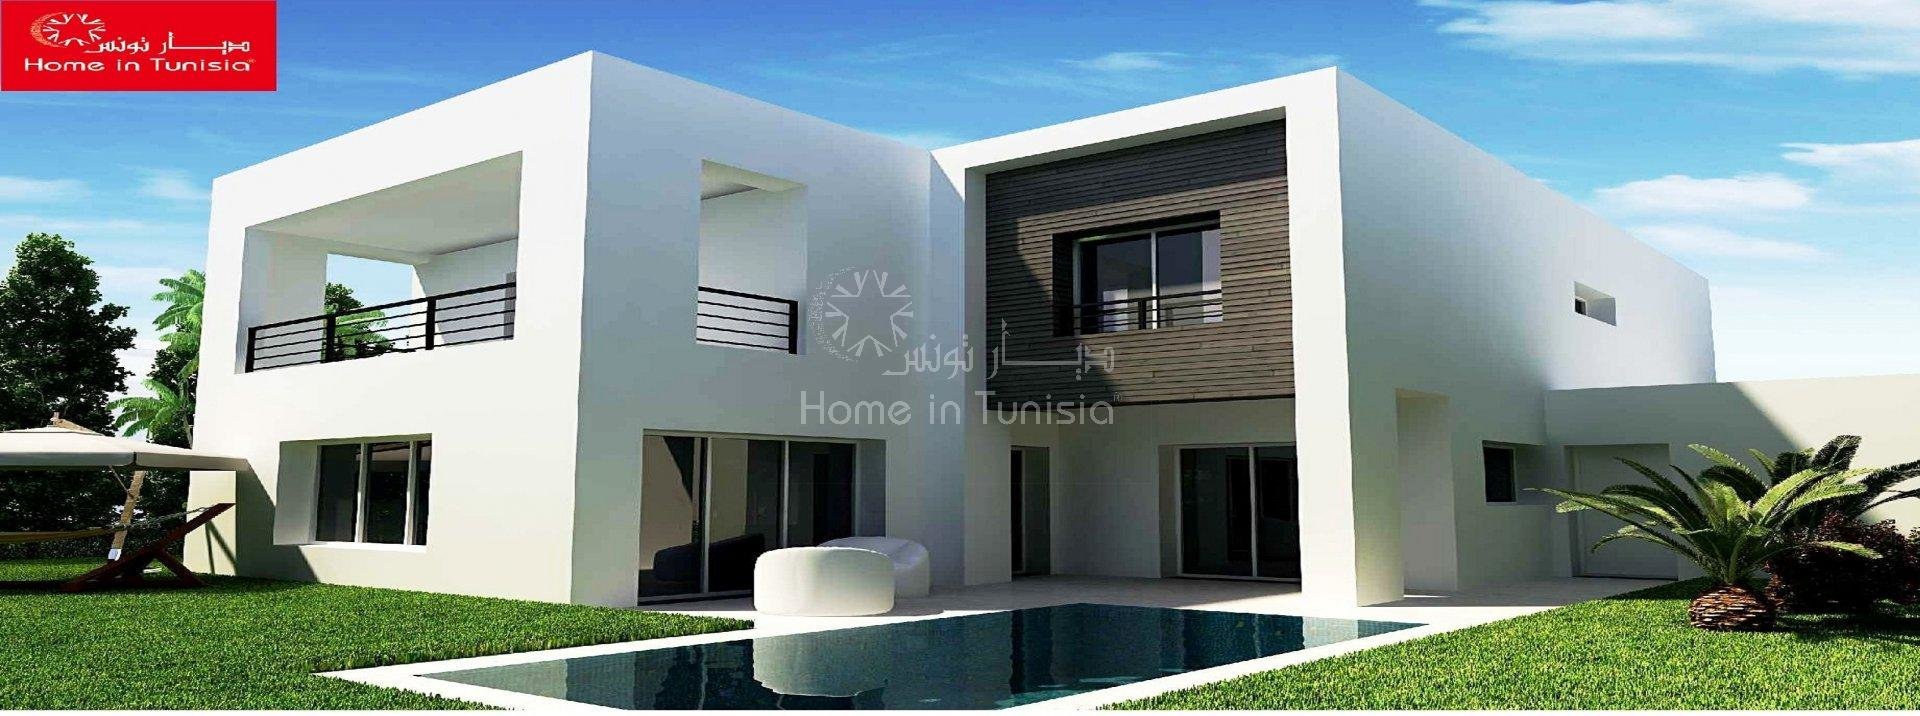 Villa golf isolée neuve de 317.14 m2 avec 4 chambres terrasse jardin piscine garage